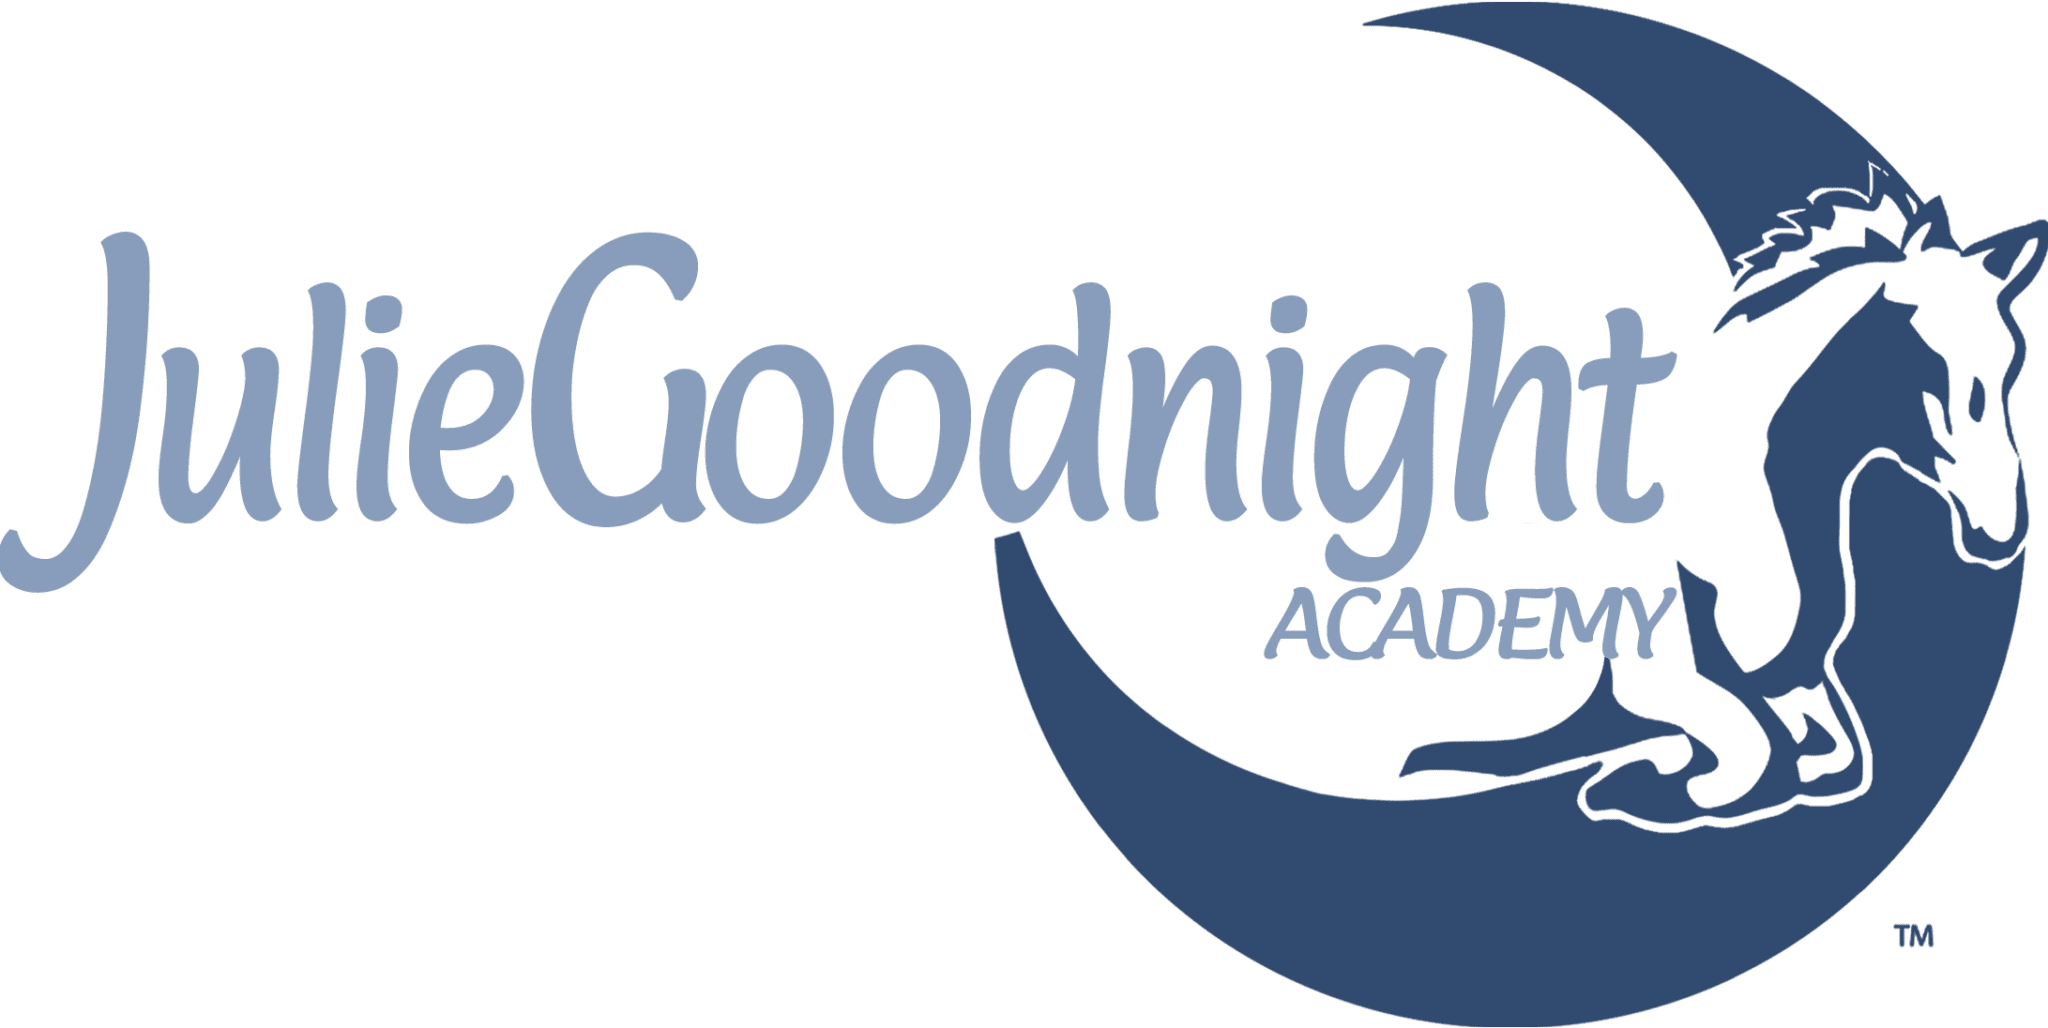 Julie Goodnight Academy